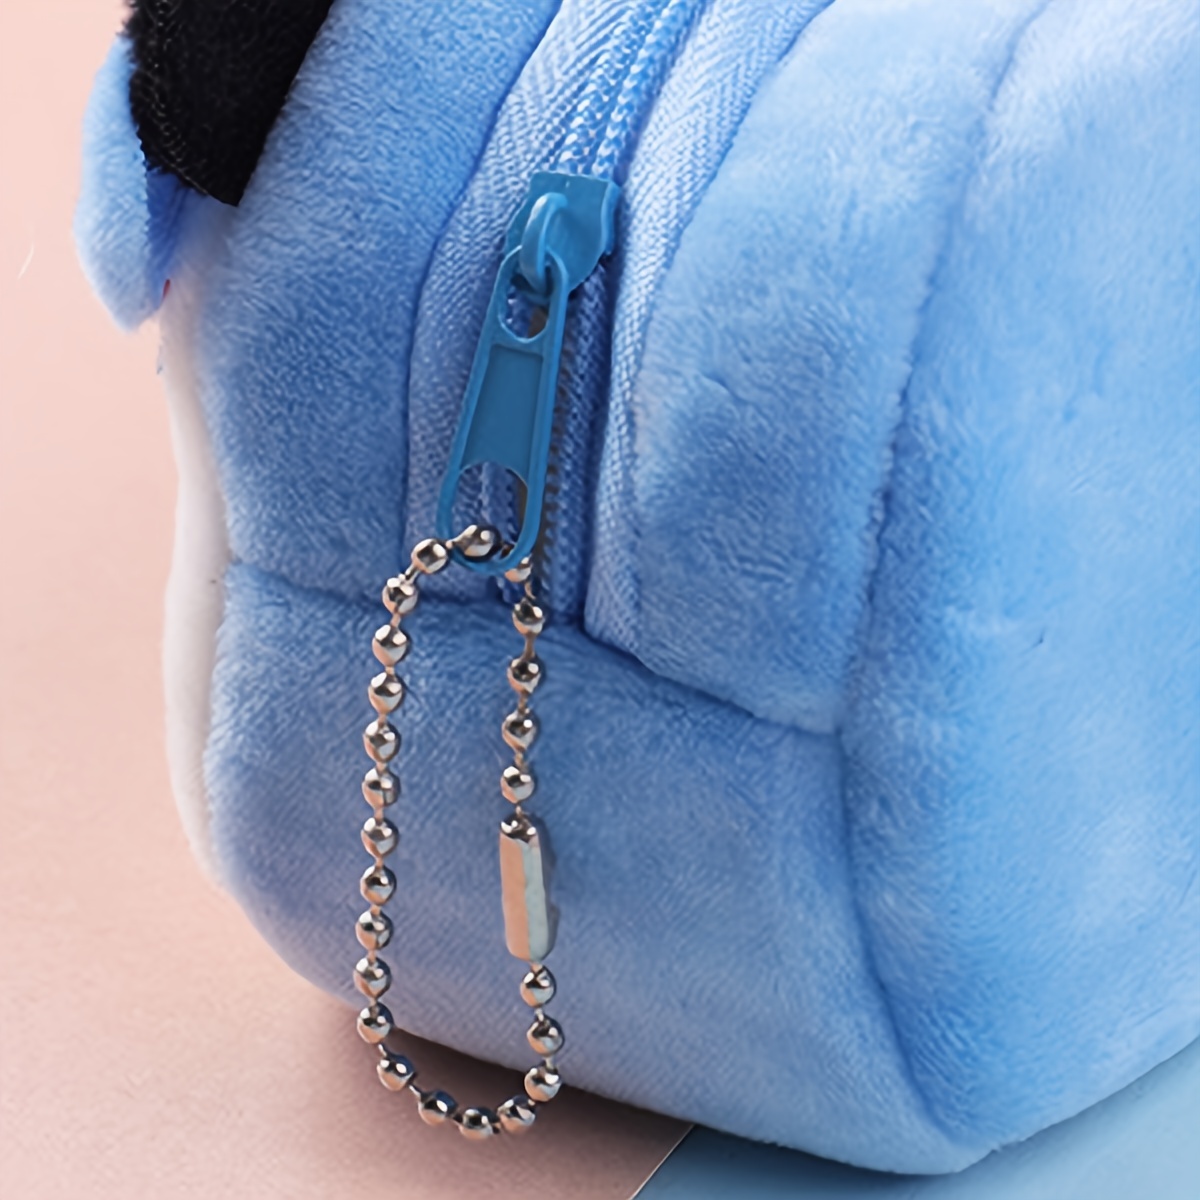 iSuperb 4PK Plush Coin Purse Cute Animal Change Purse Wallet Purse Bag with  Zipper